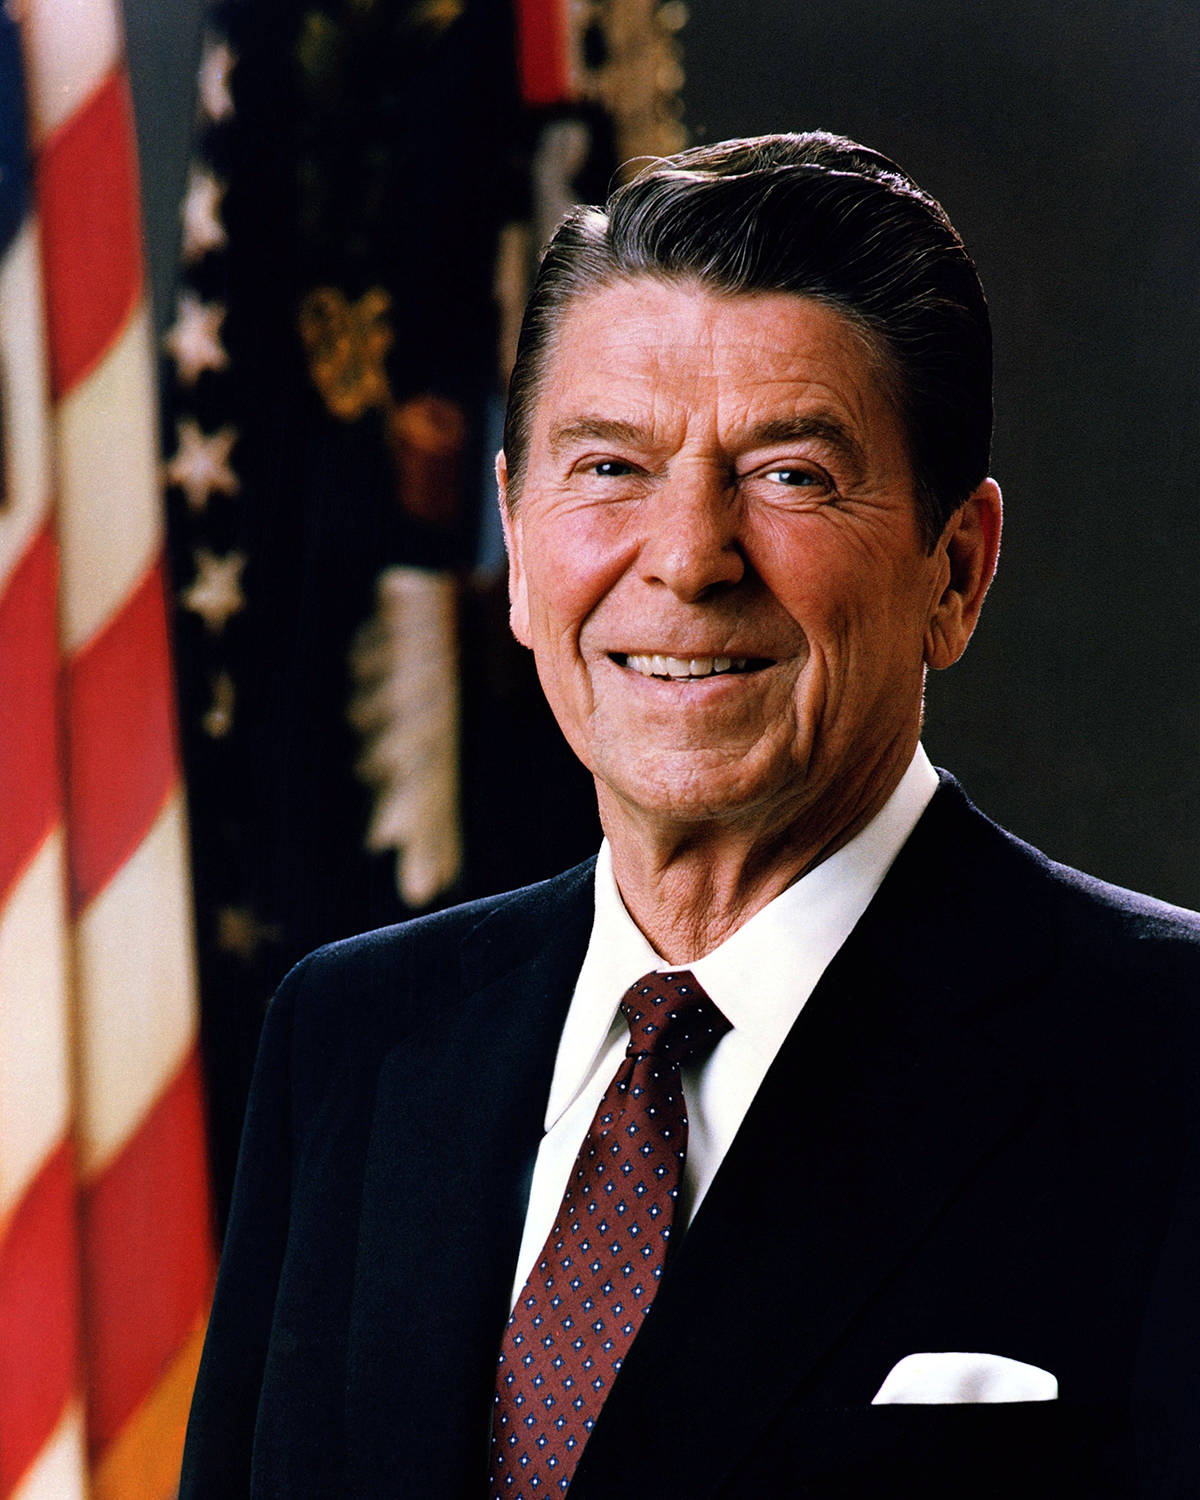 President Ronald Reagan 1981 Presidential Portrait